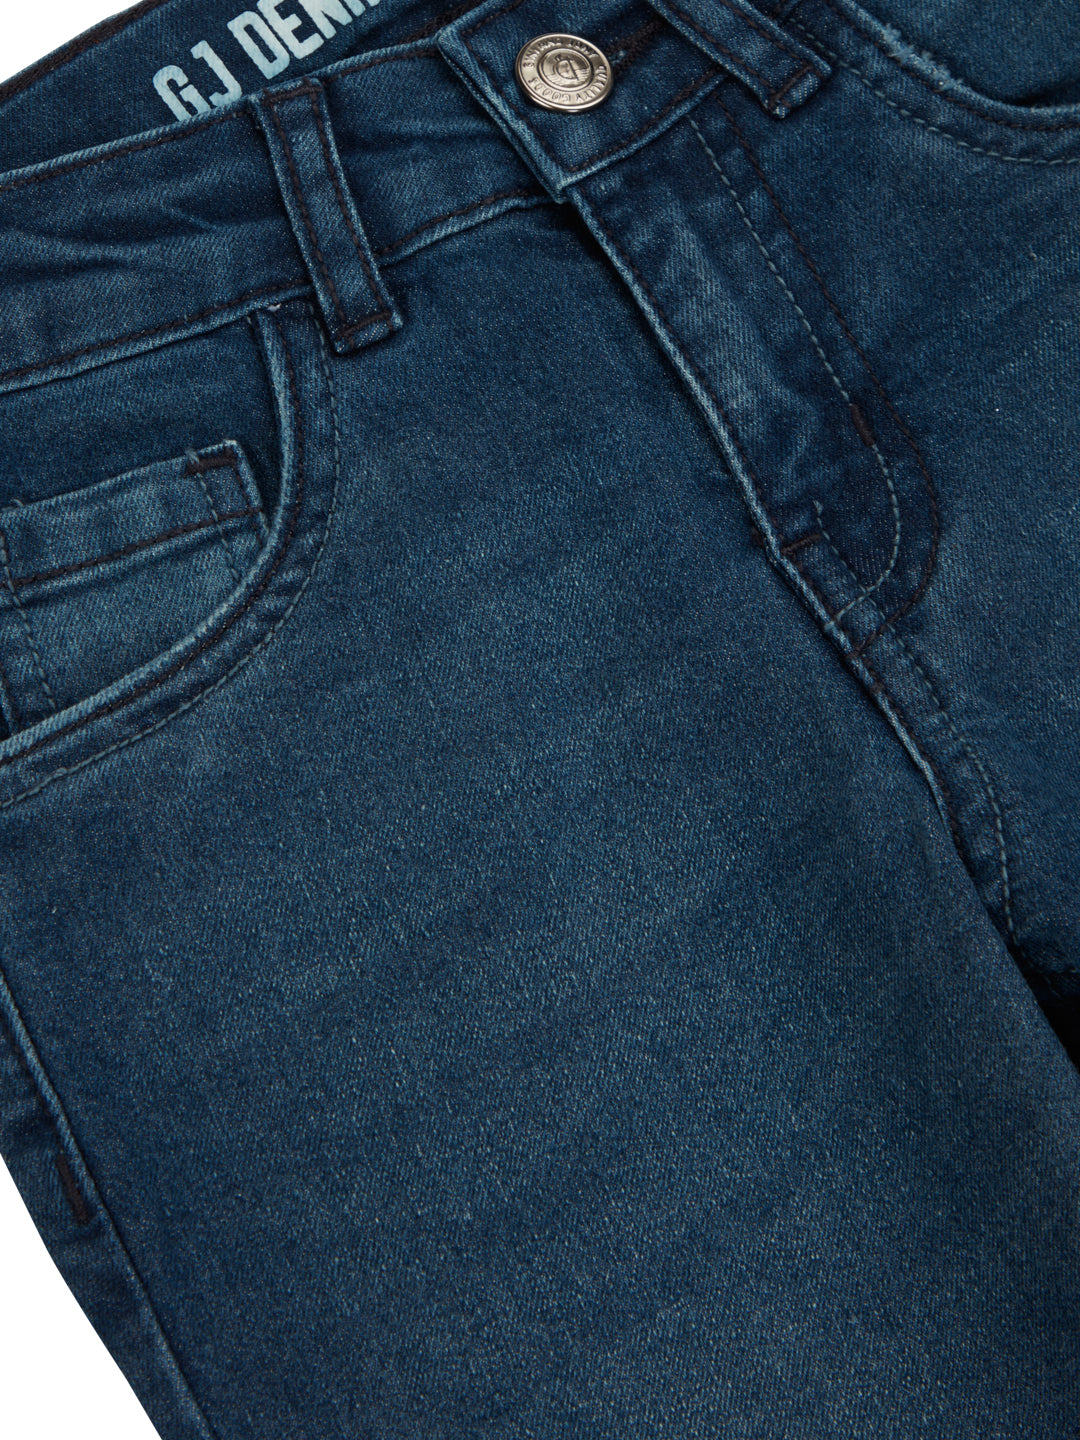 Boys Navy Blue Washed Denim Fixed Waist Jeans